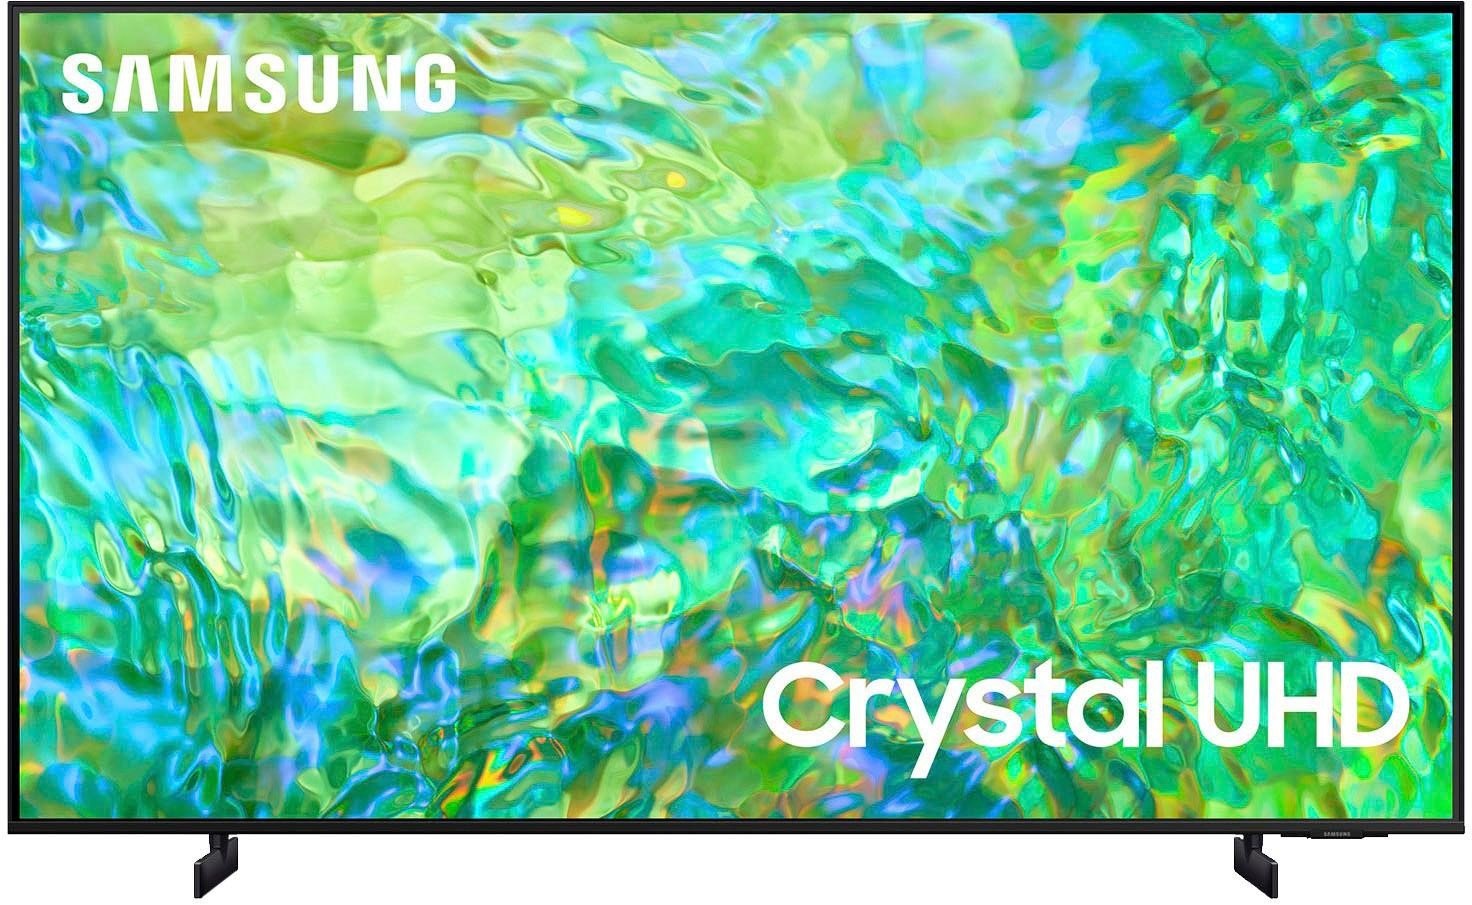 Samsung CU8000 Crystal UHD 4K Smart Tizen TV 55